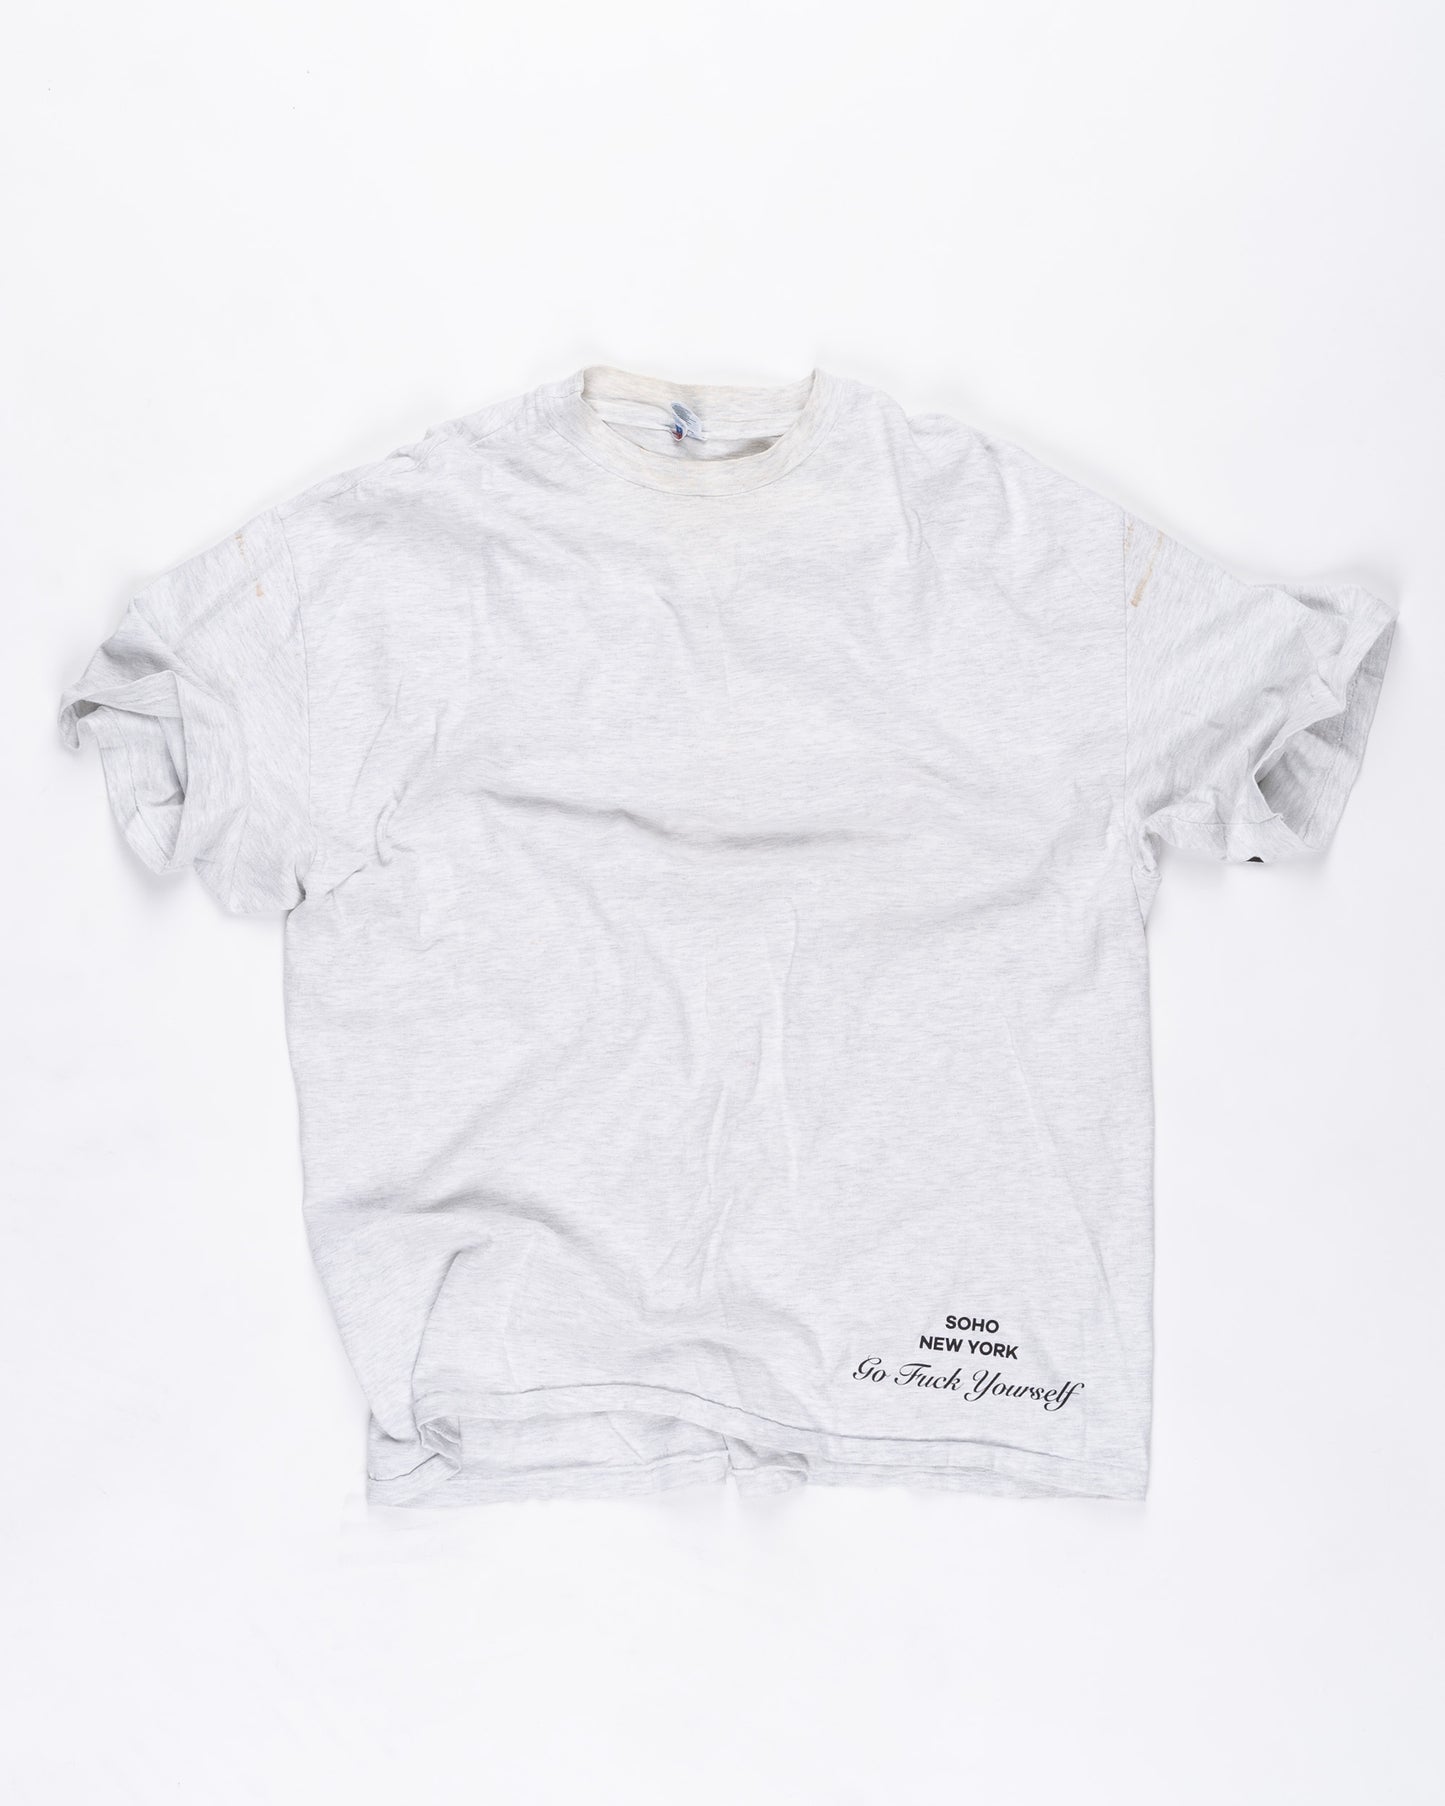 Light Gray T-Shirt Size: XXLarge